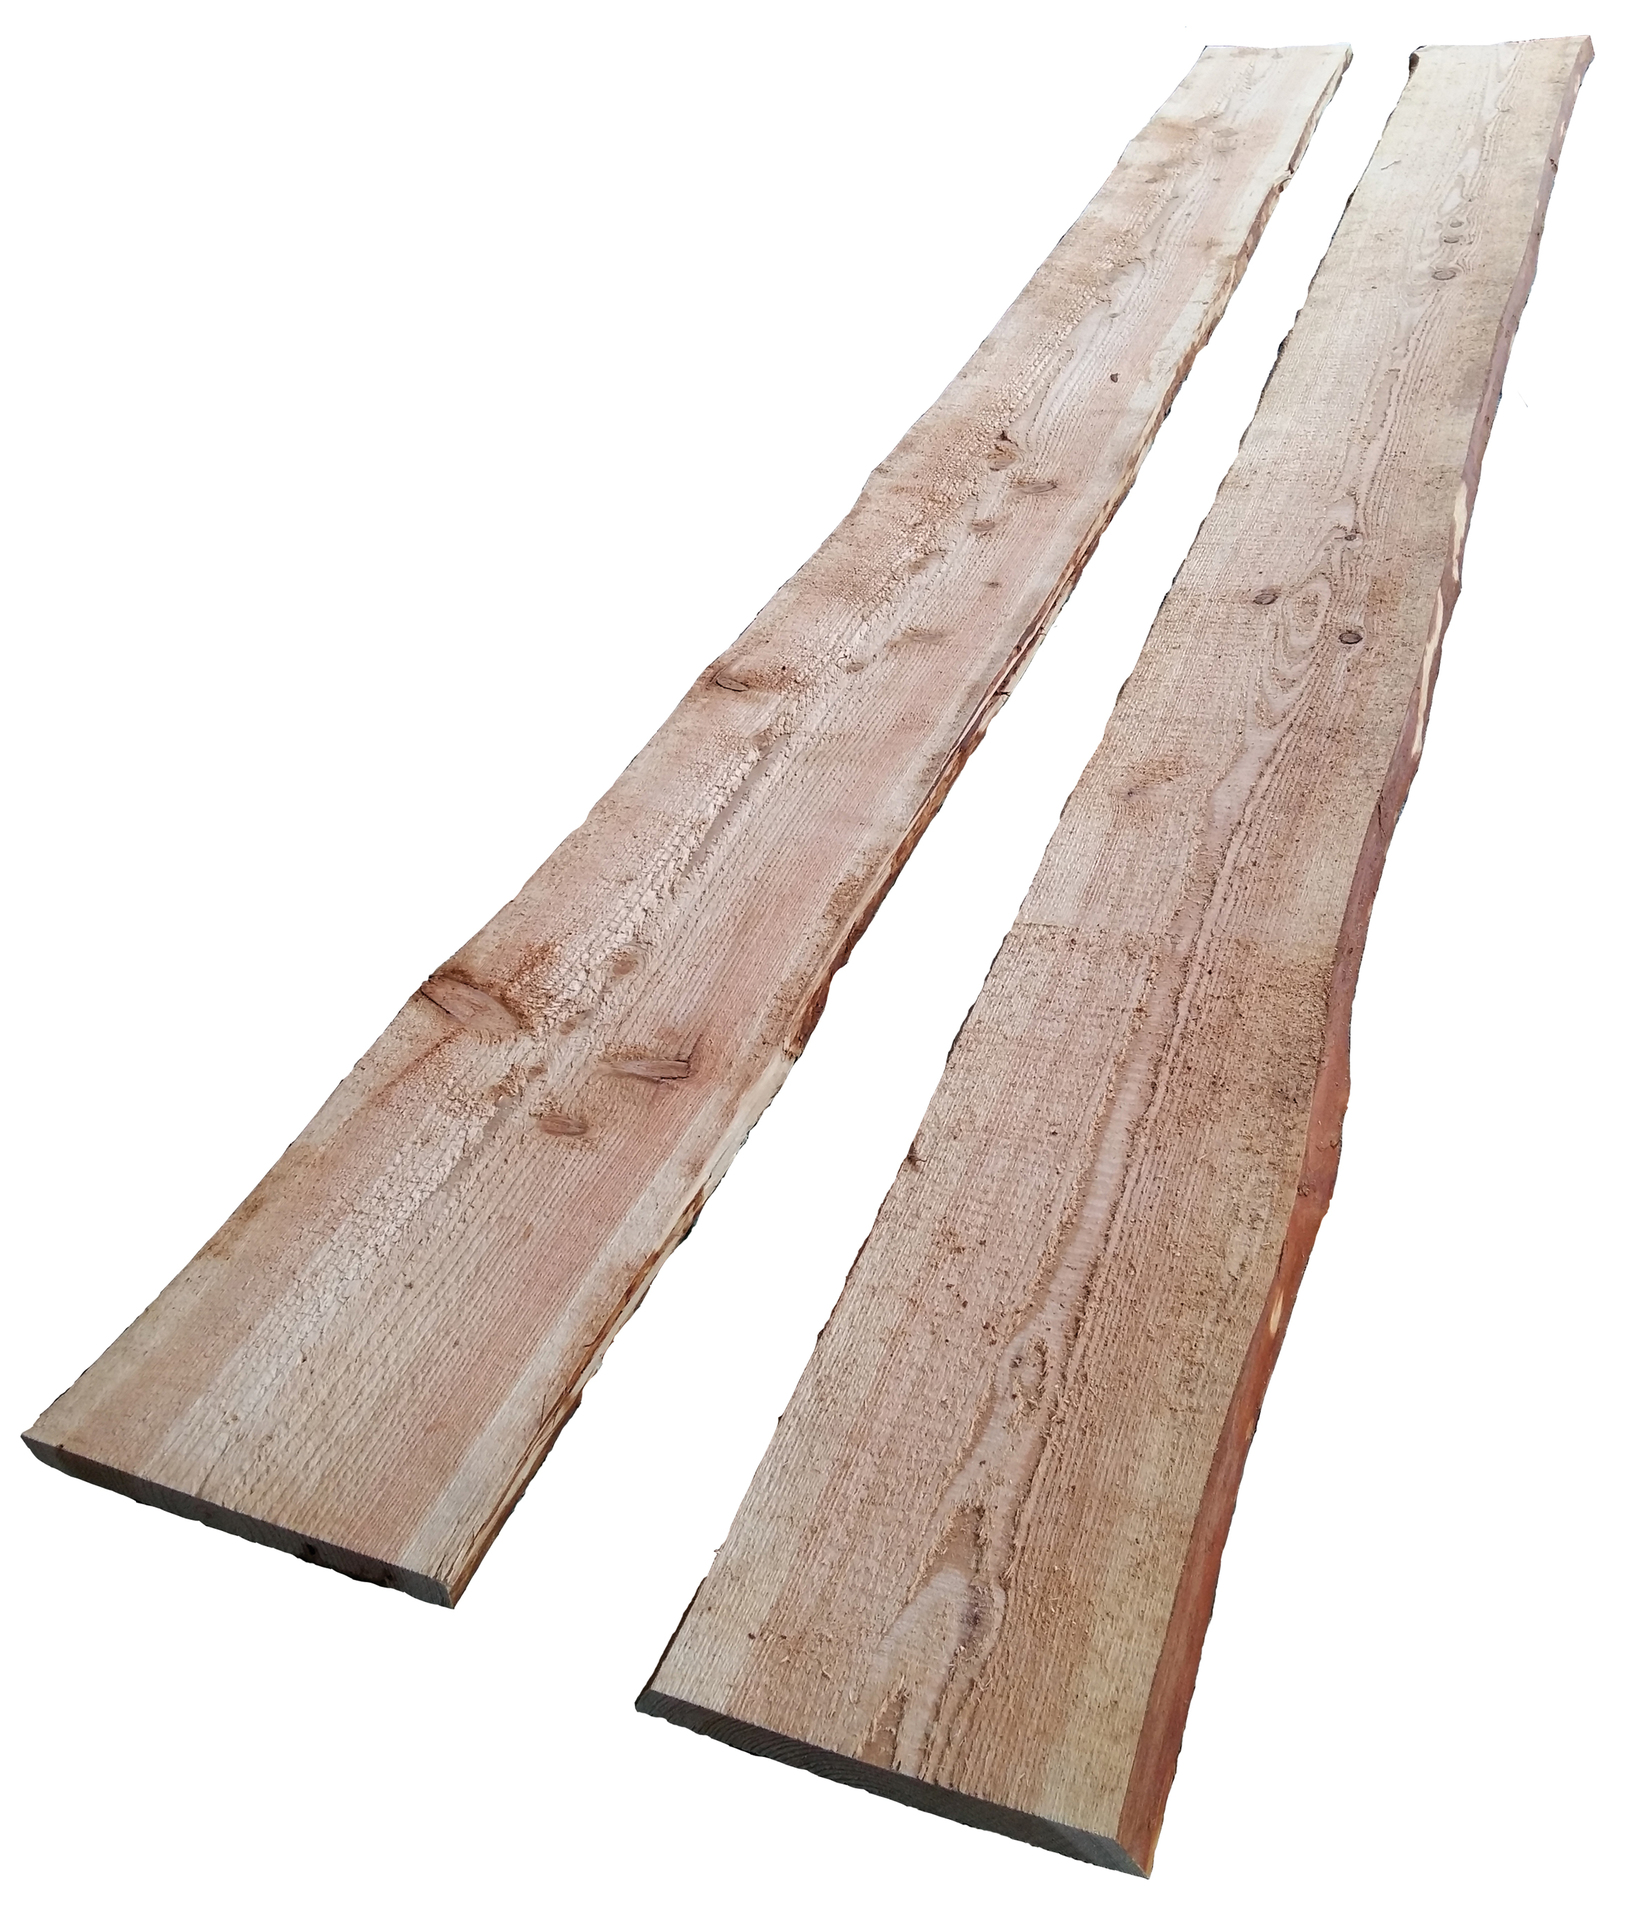 RegiS-Holzhandel Bonanzabohle Lärche gehobelt